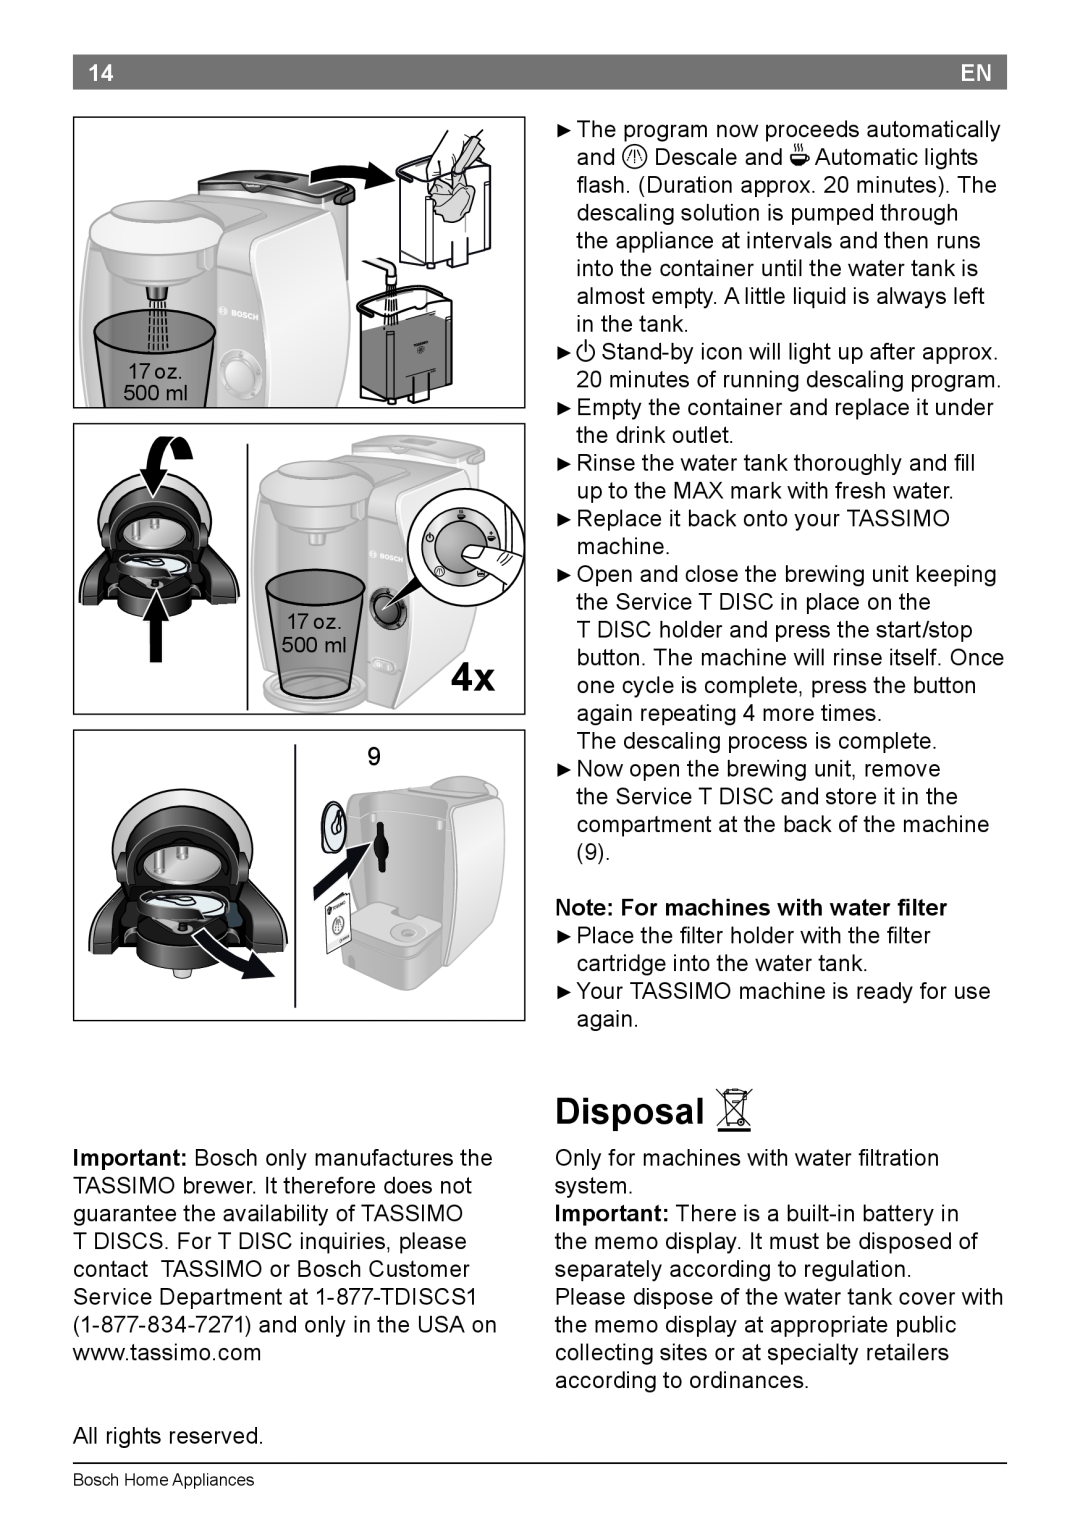 Bosch Appliances T45 instruction manual Disposal A 